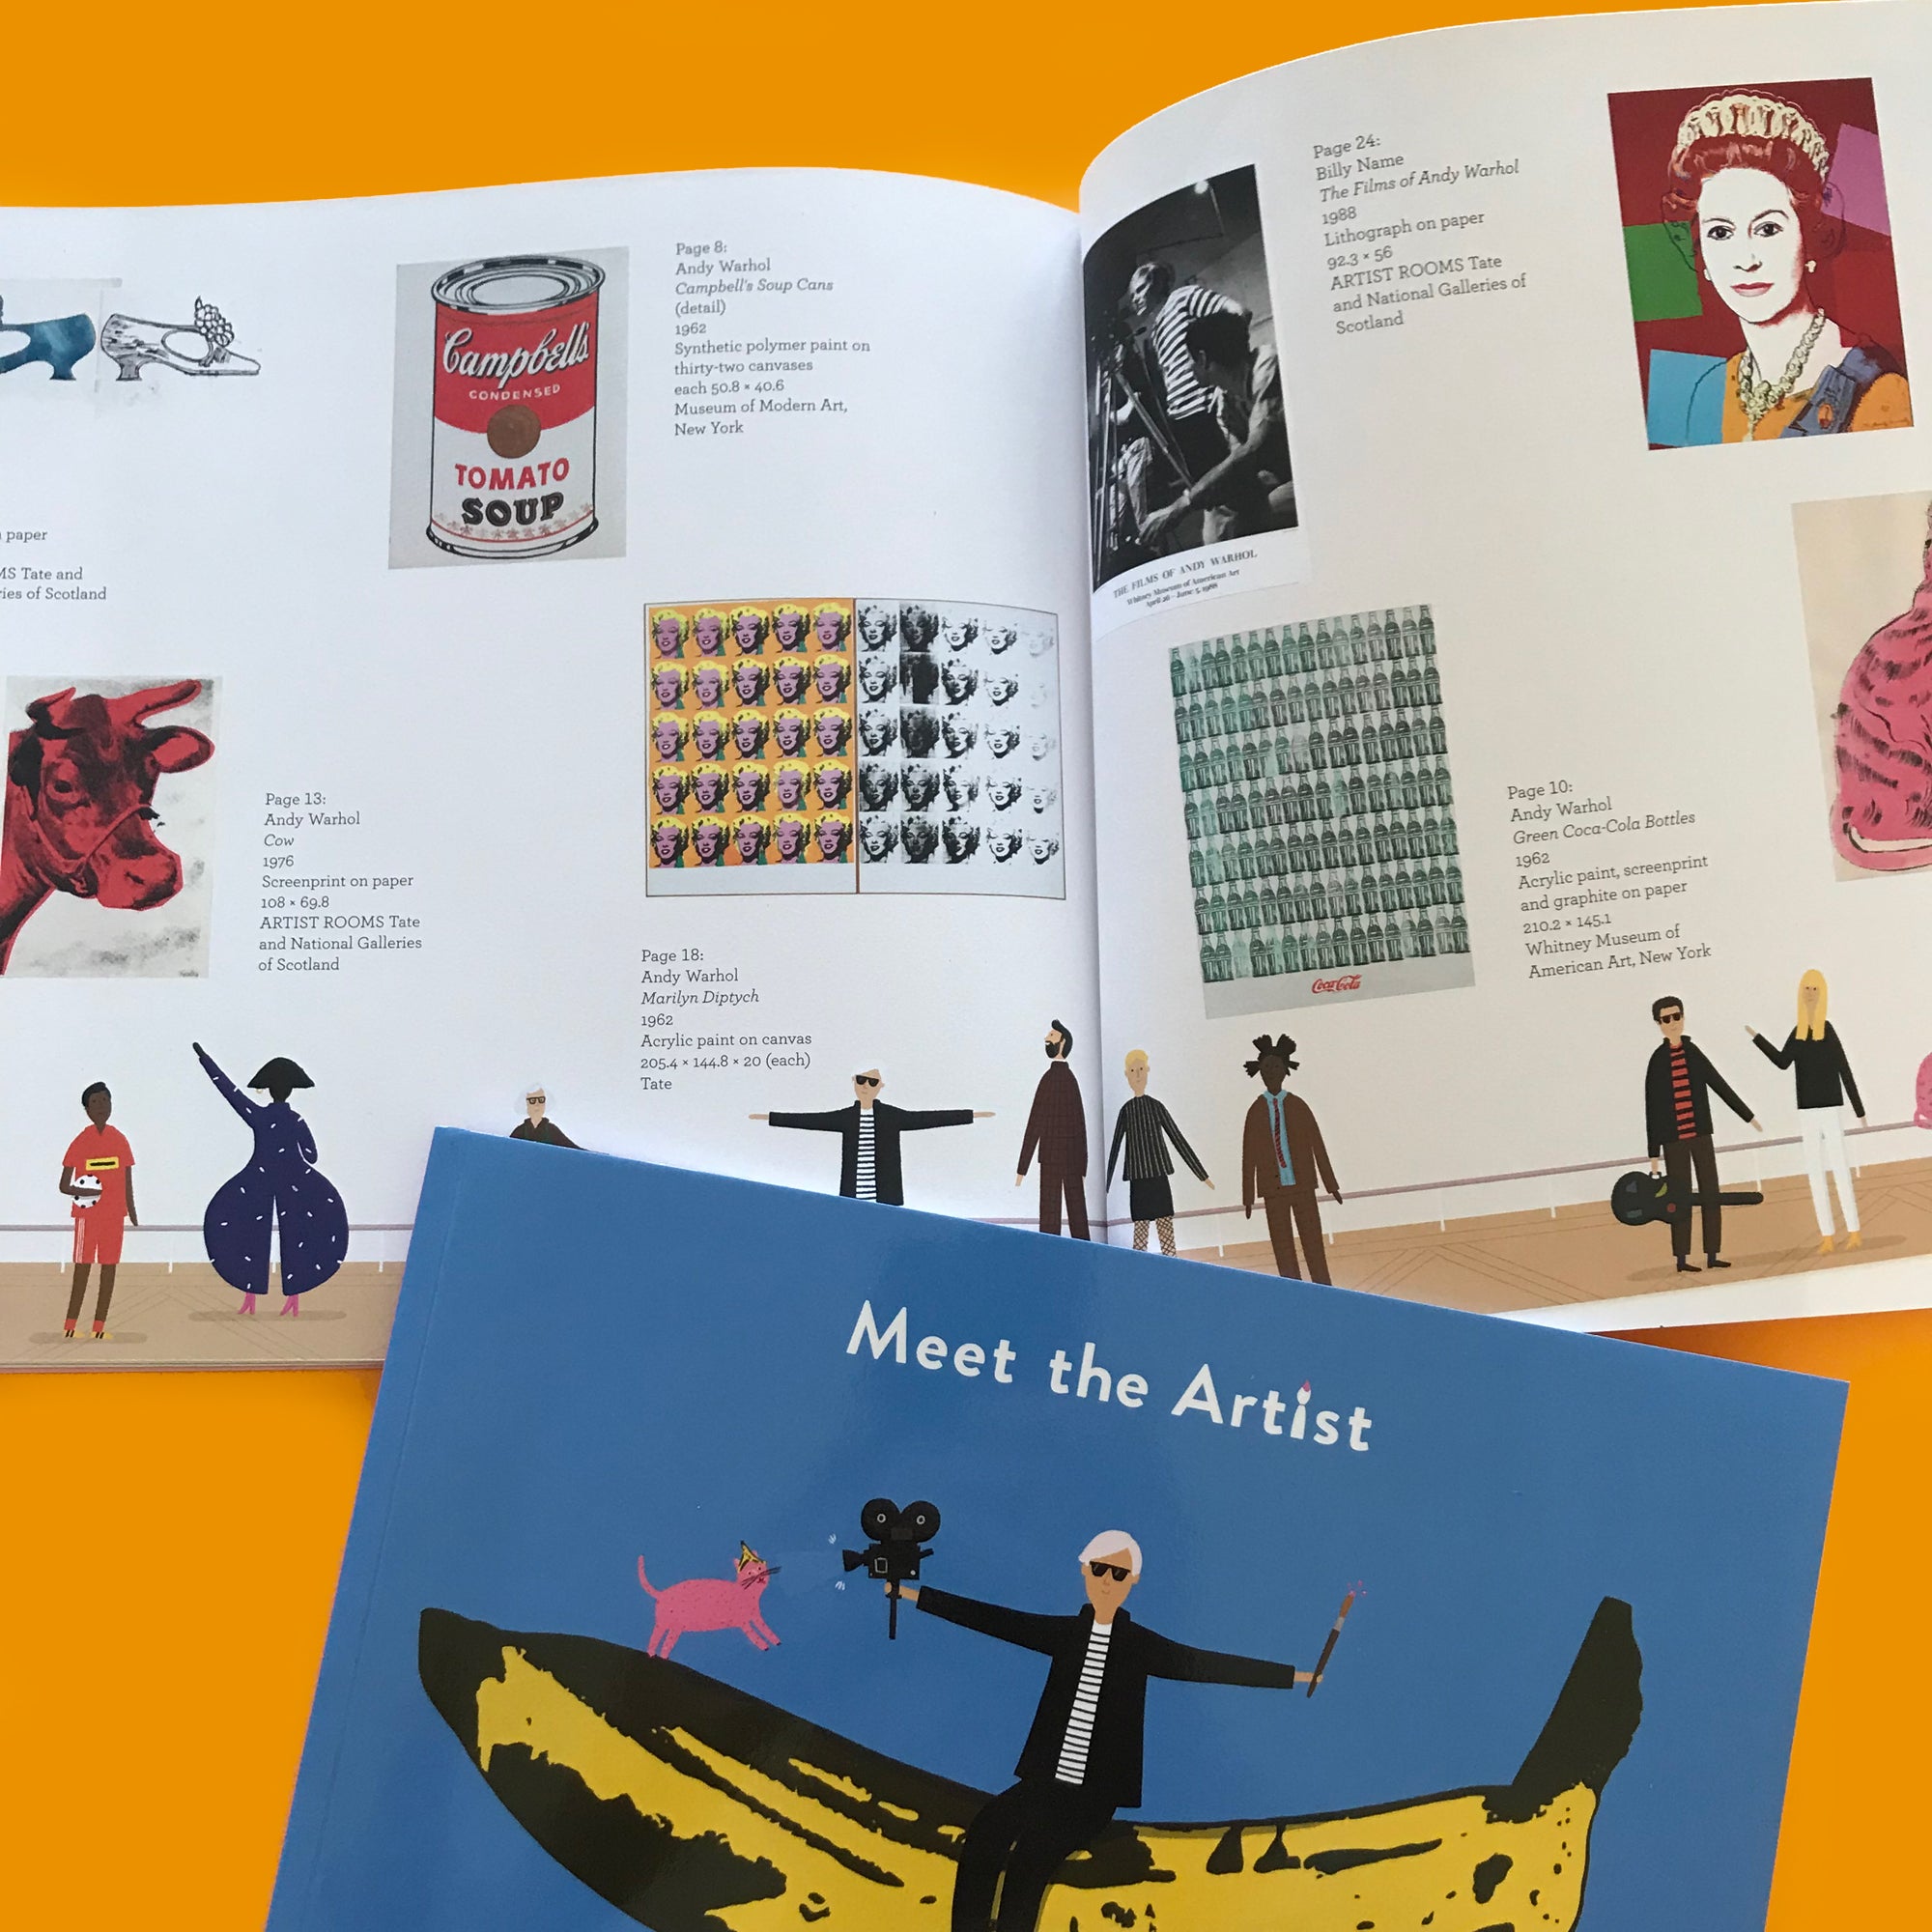 Meet the Artist: Andy Warhol activity book